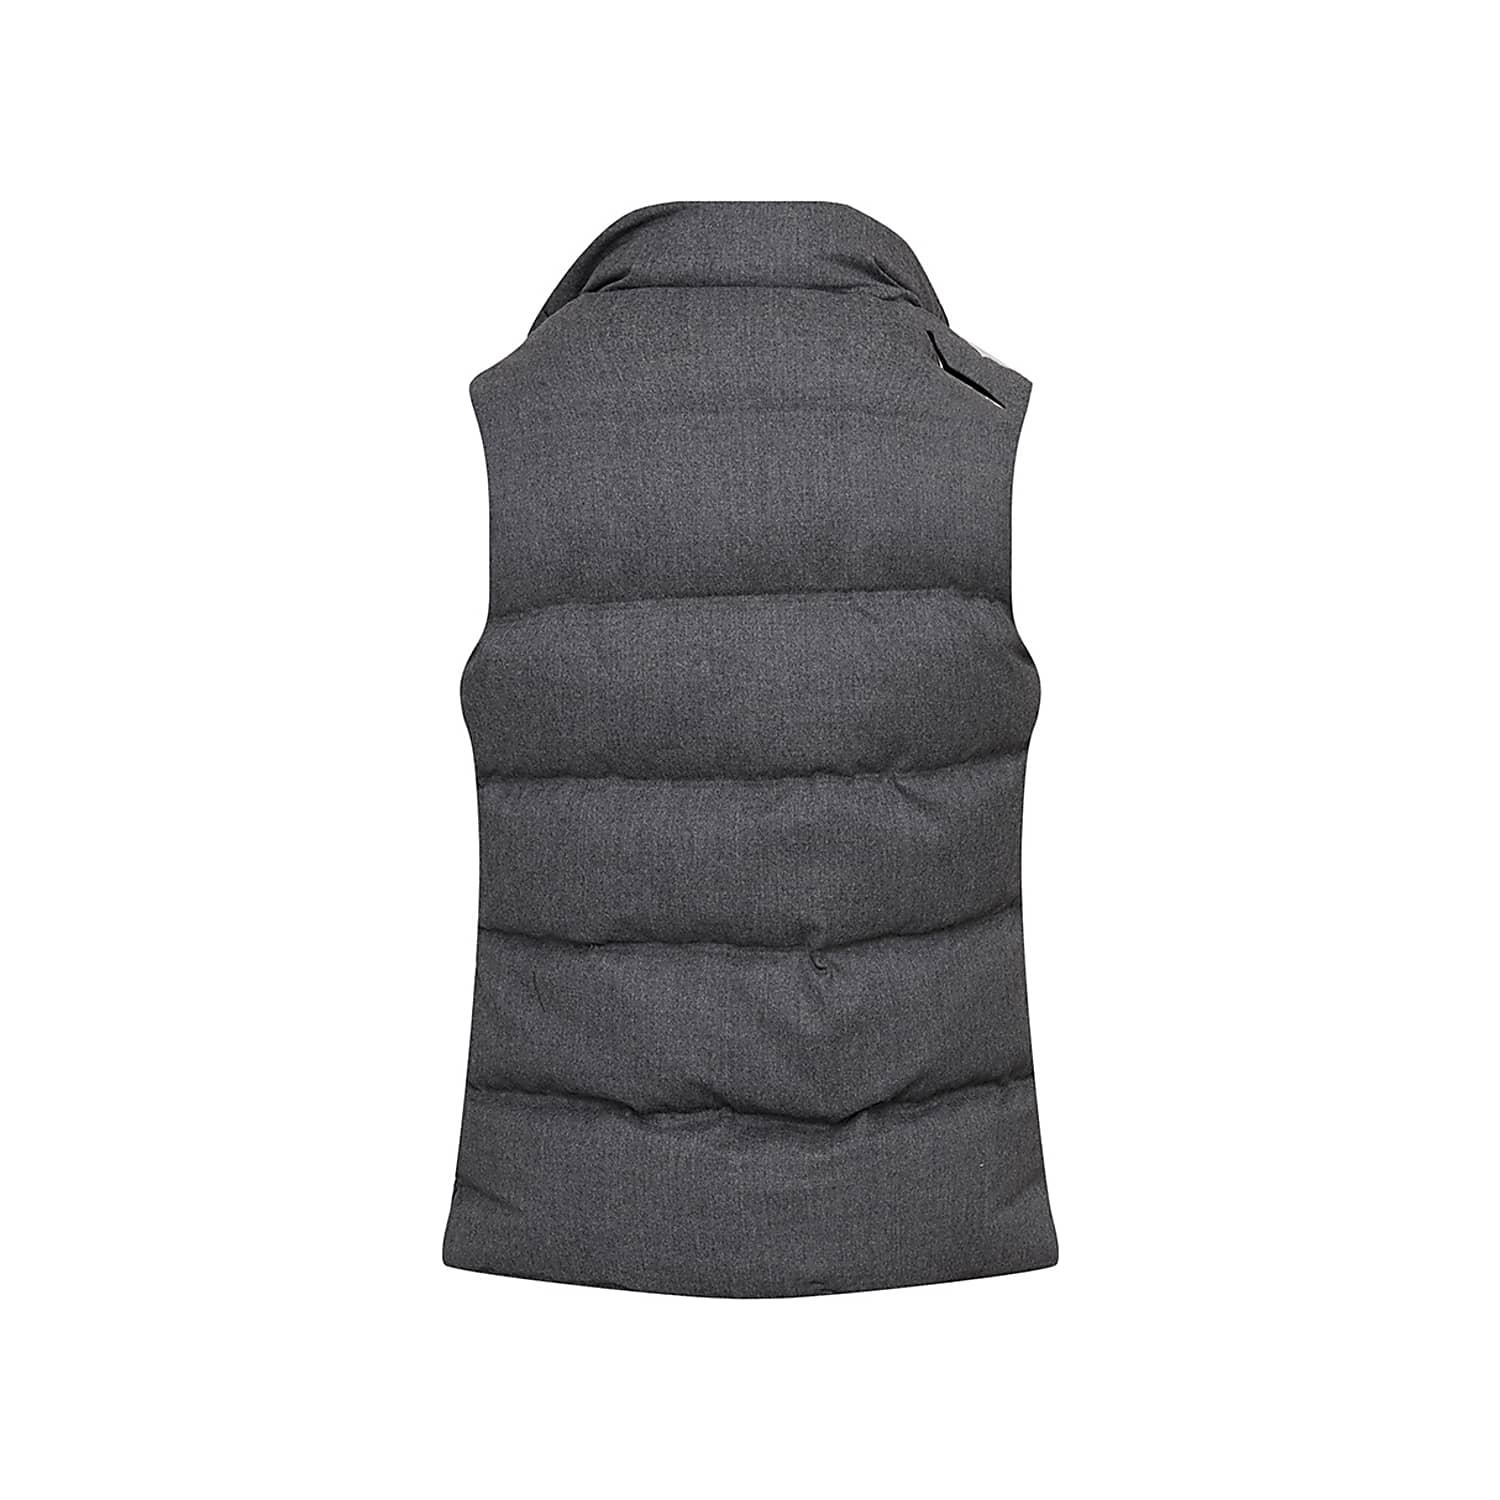 Men's vest WITO